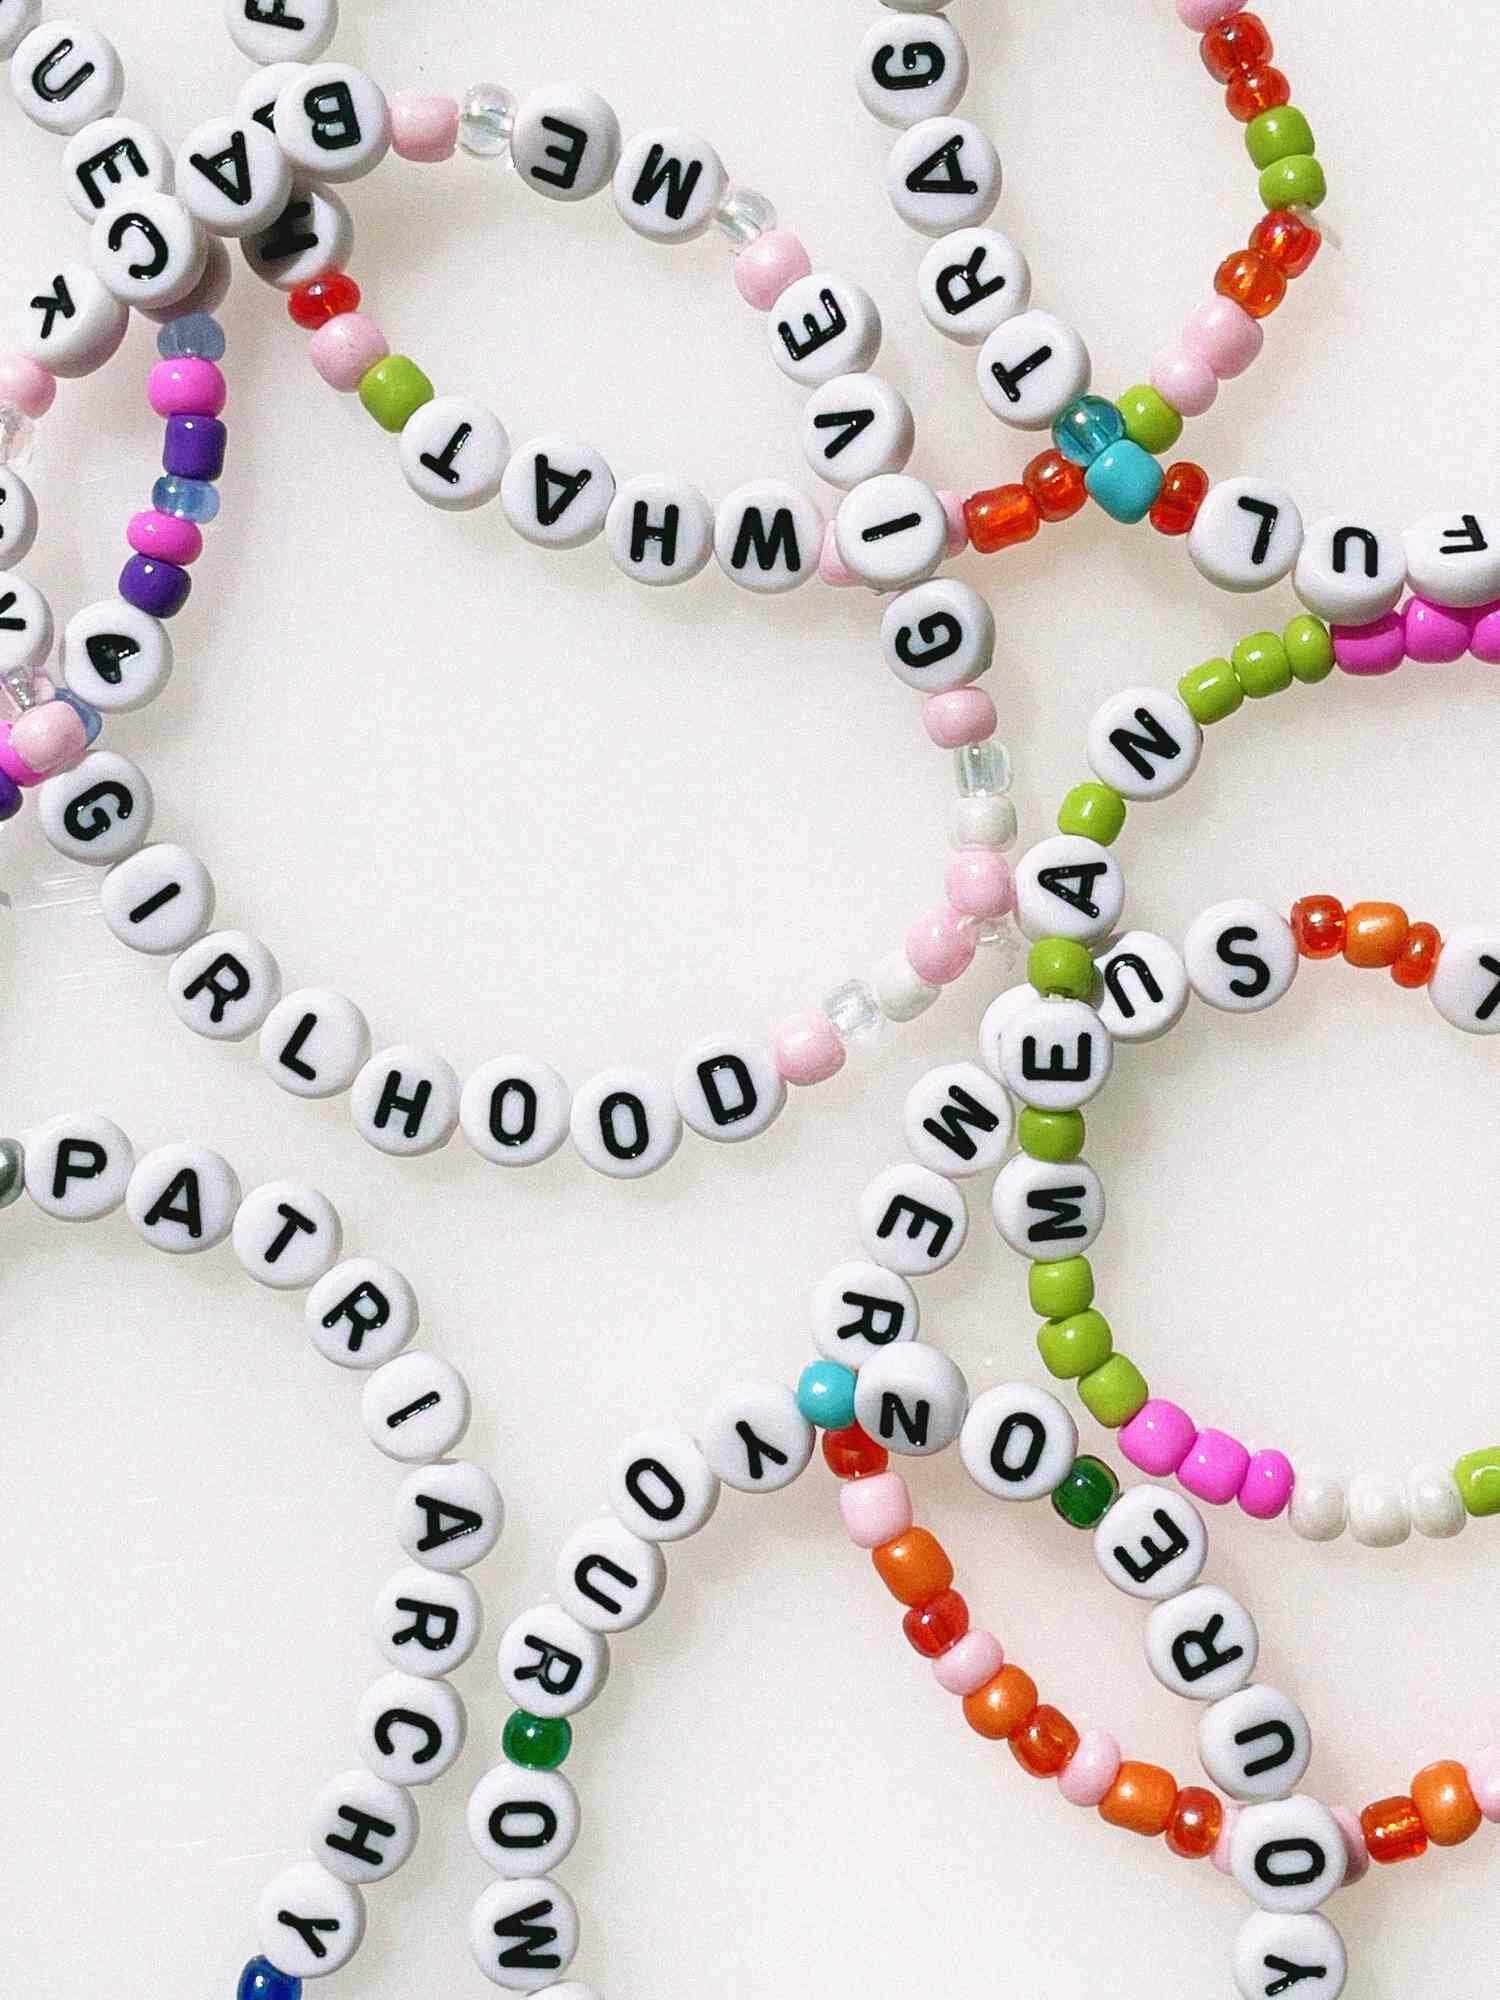 Letter friendship bracelets in different colors